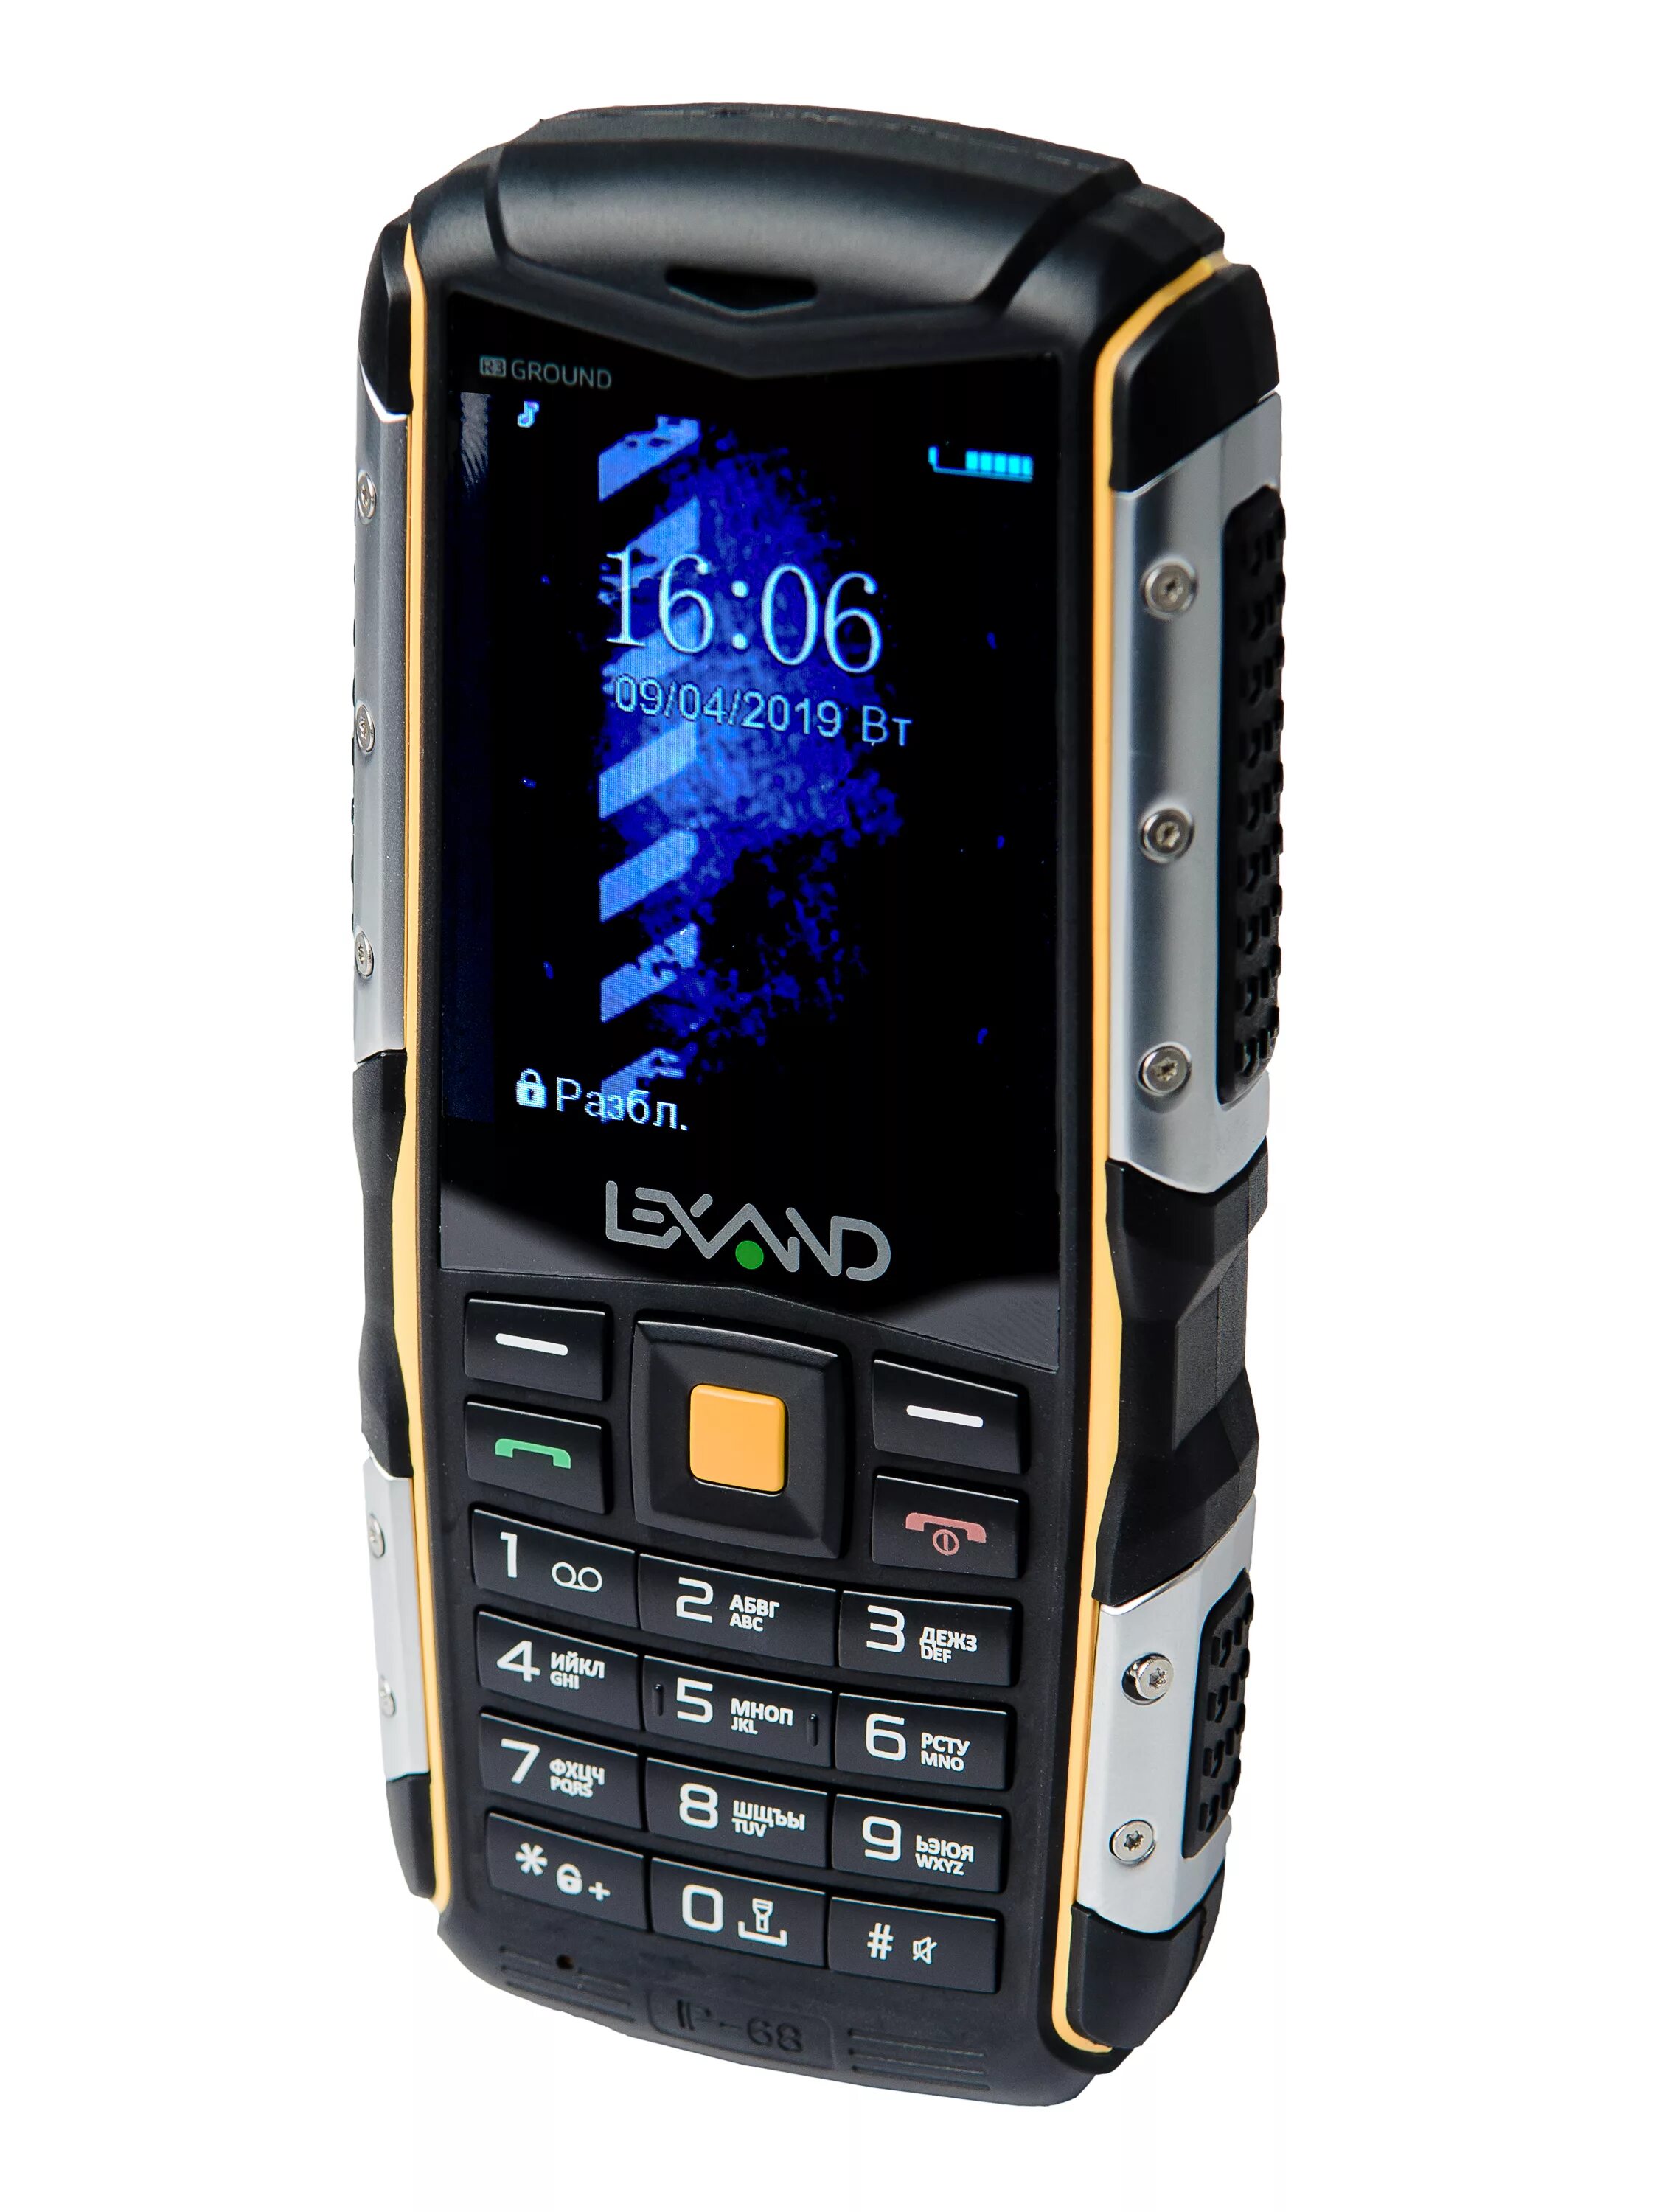 Lexand r3 ground. Lexand r3 ground аккумулятор. Кнопочный телефон. Сотовый телефон кнопочный. Качественный кнопочный мобильный